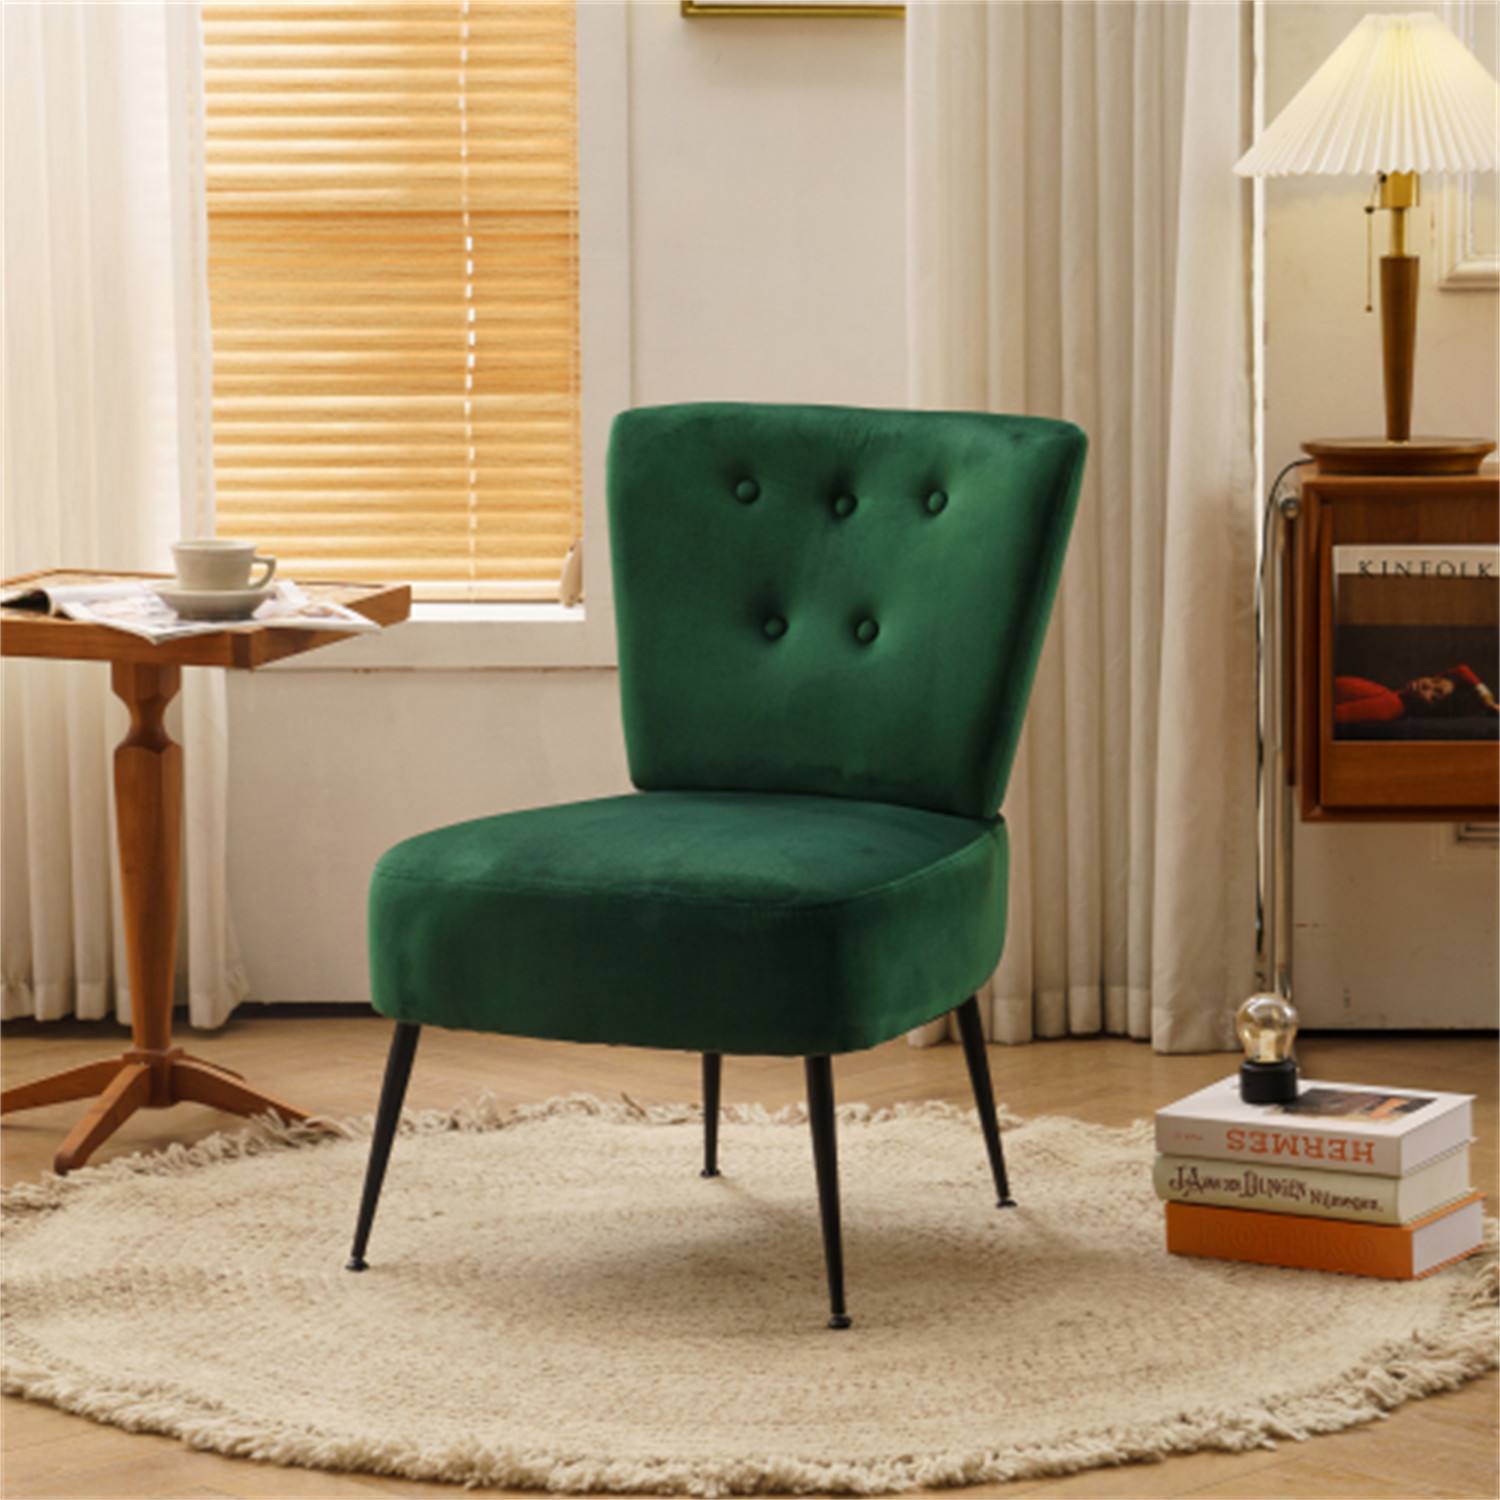 Tufted Back Dark Green Velvet Fabric Farmhouse Slipper Chair Accent Chair with Black Metal Legs for Dining Room Living Room Bedroom